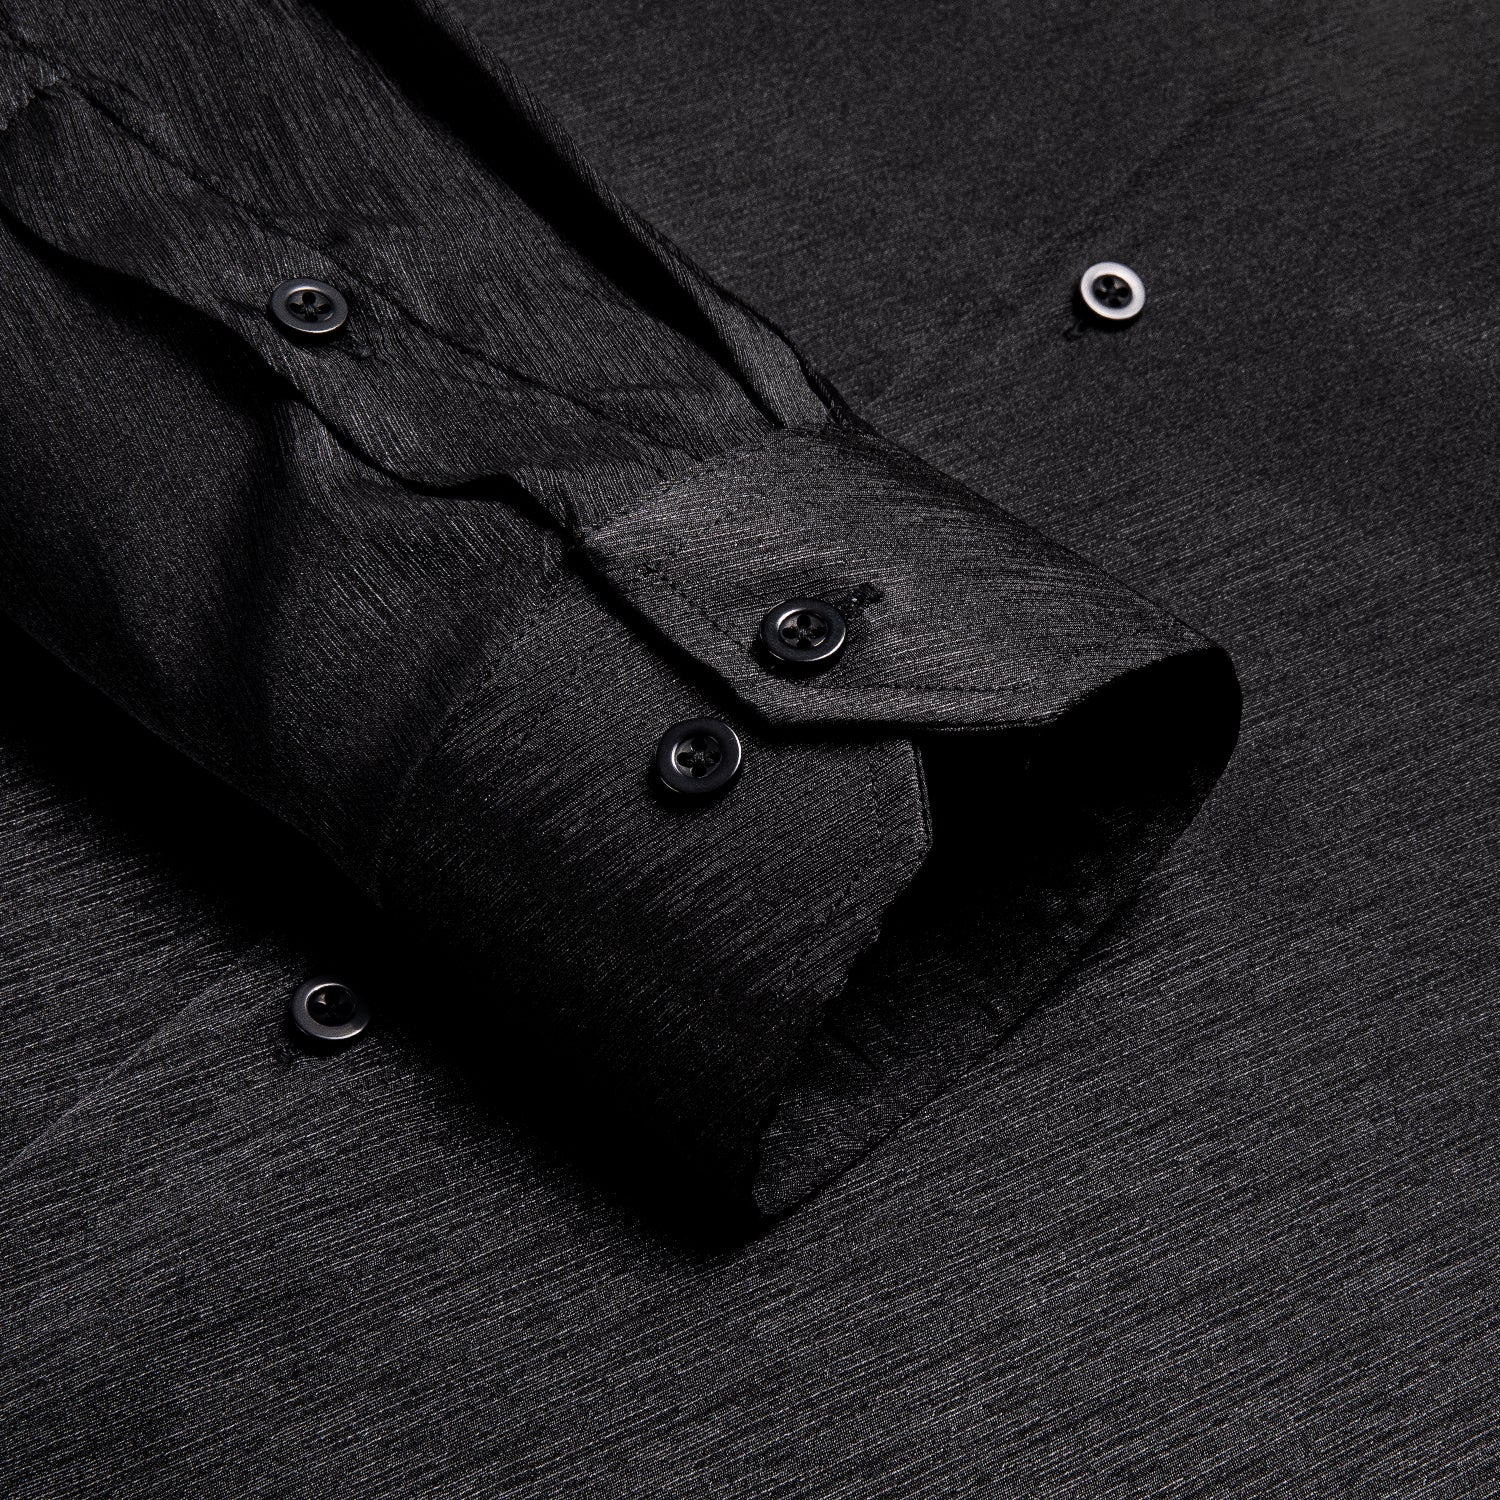 Black Solid Silk Men's Long Sleeve Dress Shirt